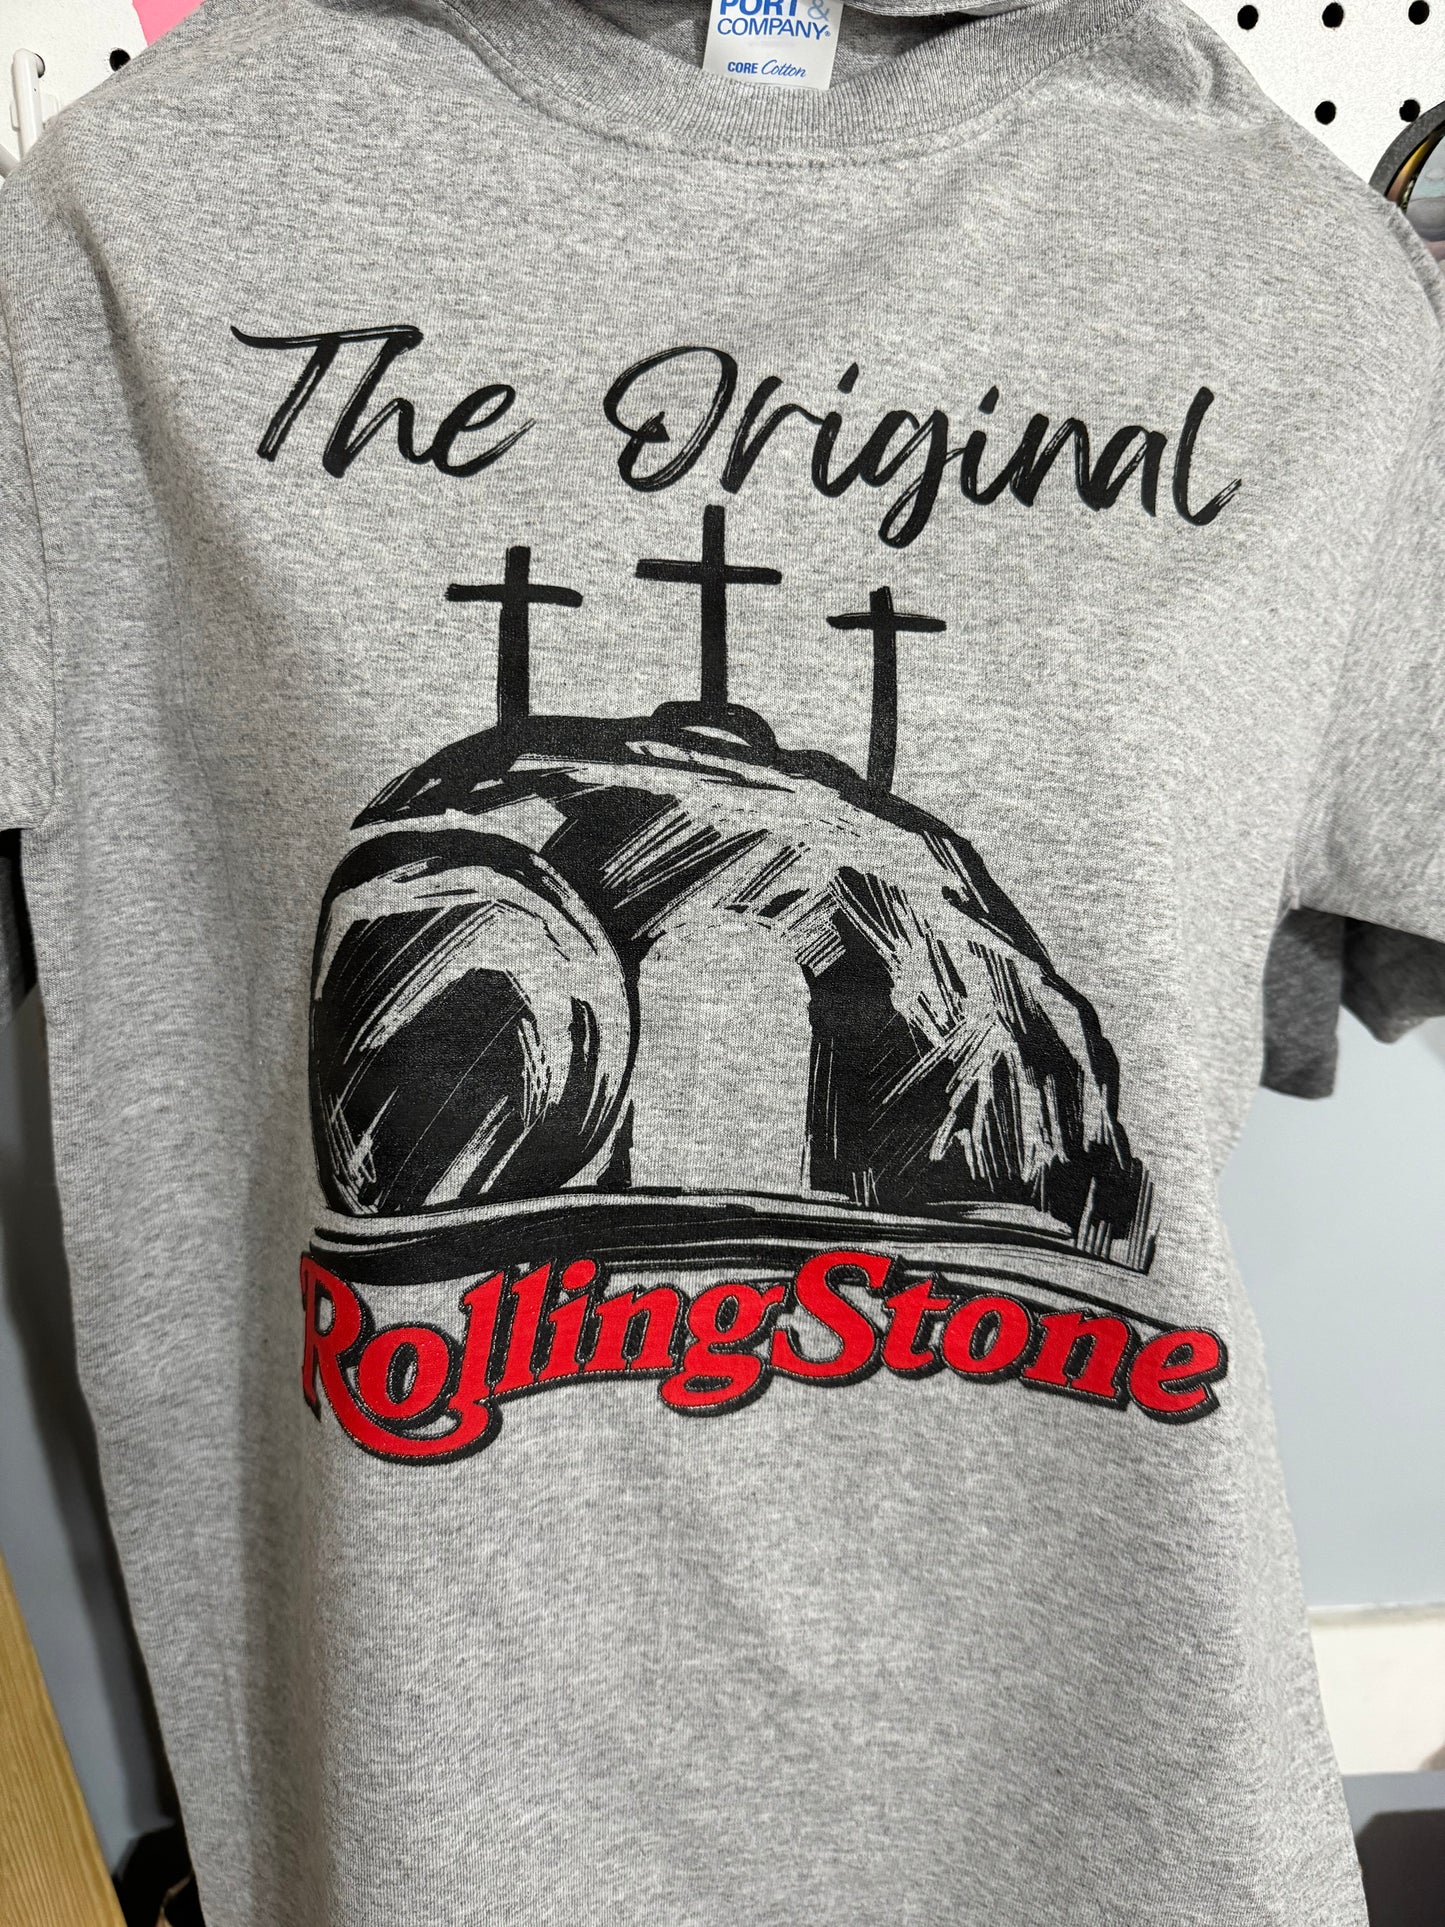 Rolling Stone t-shirt